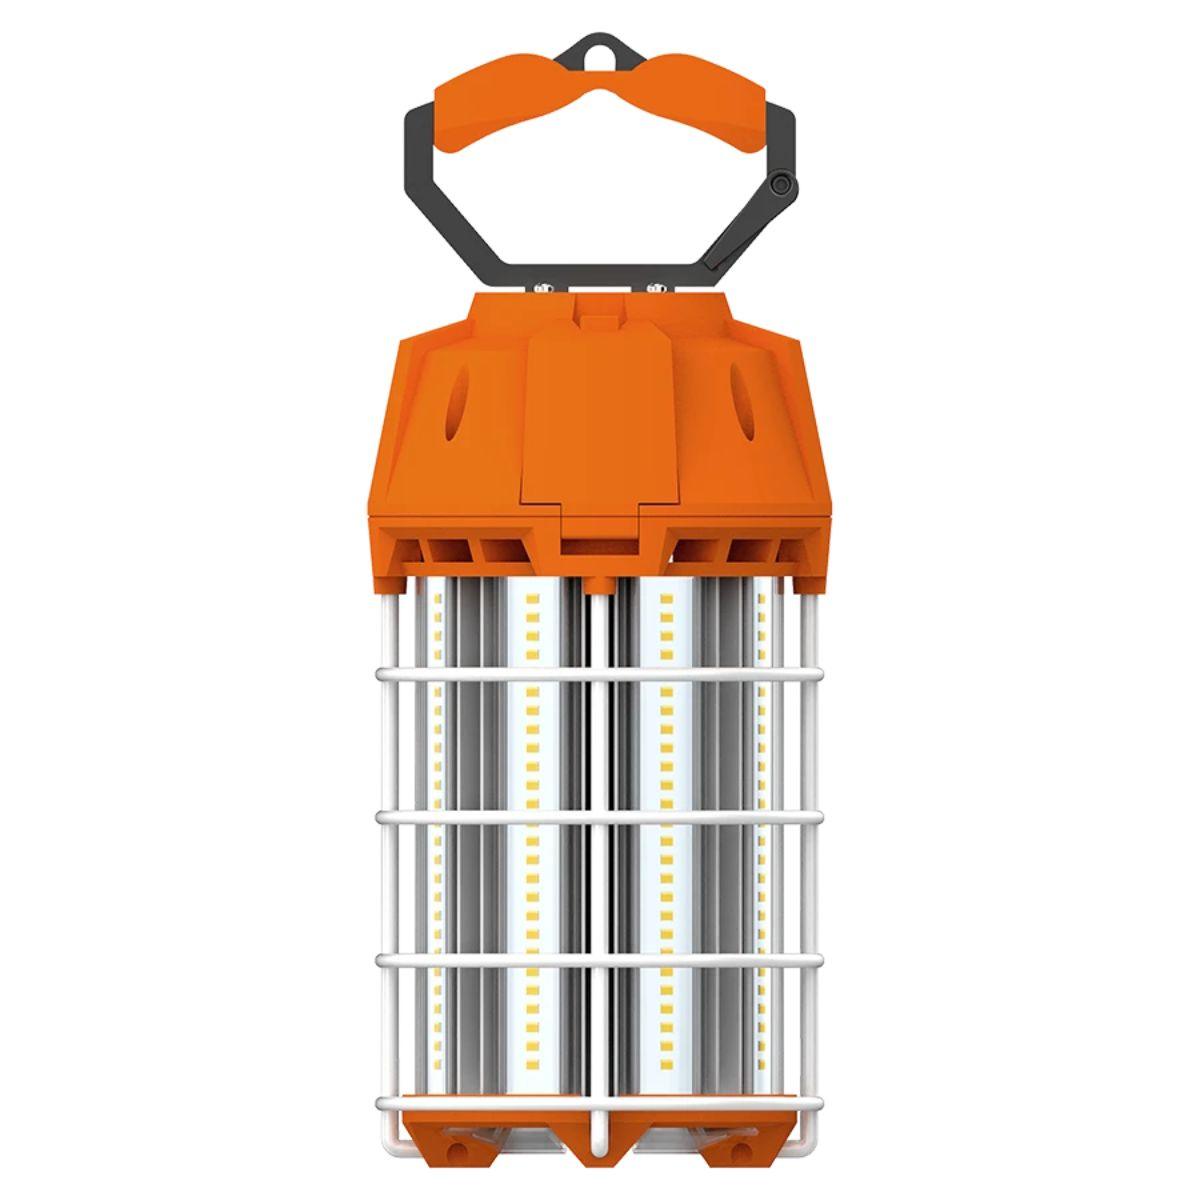 18000 Lumens LED Lighting For Construction, 150 Watts 5000K 120V, 35ft Cord Included - Bees Lighting